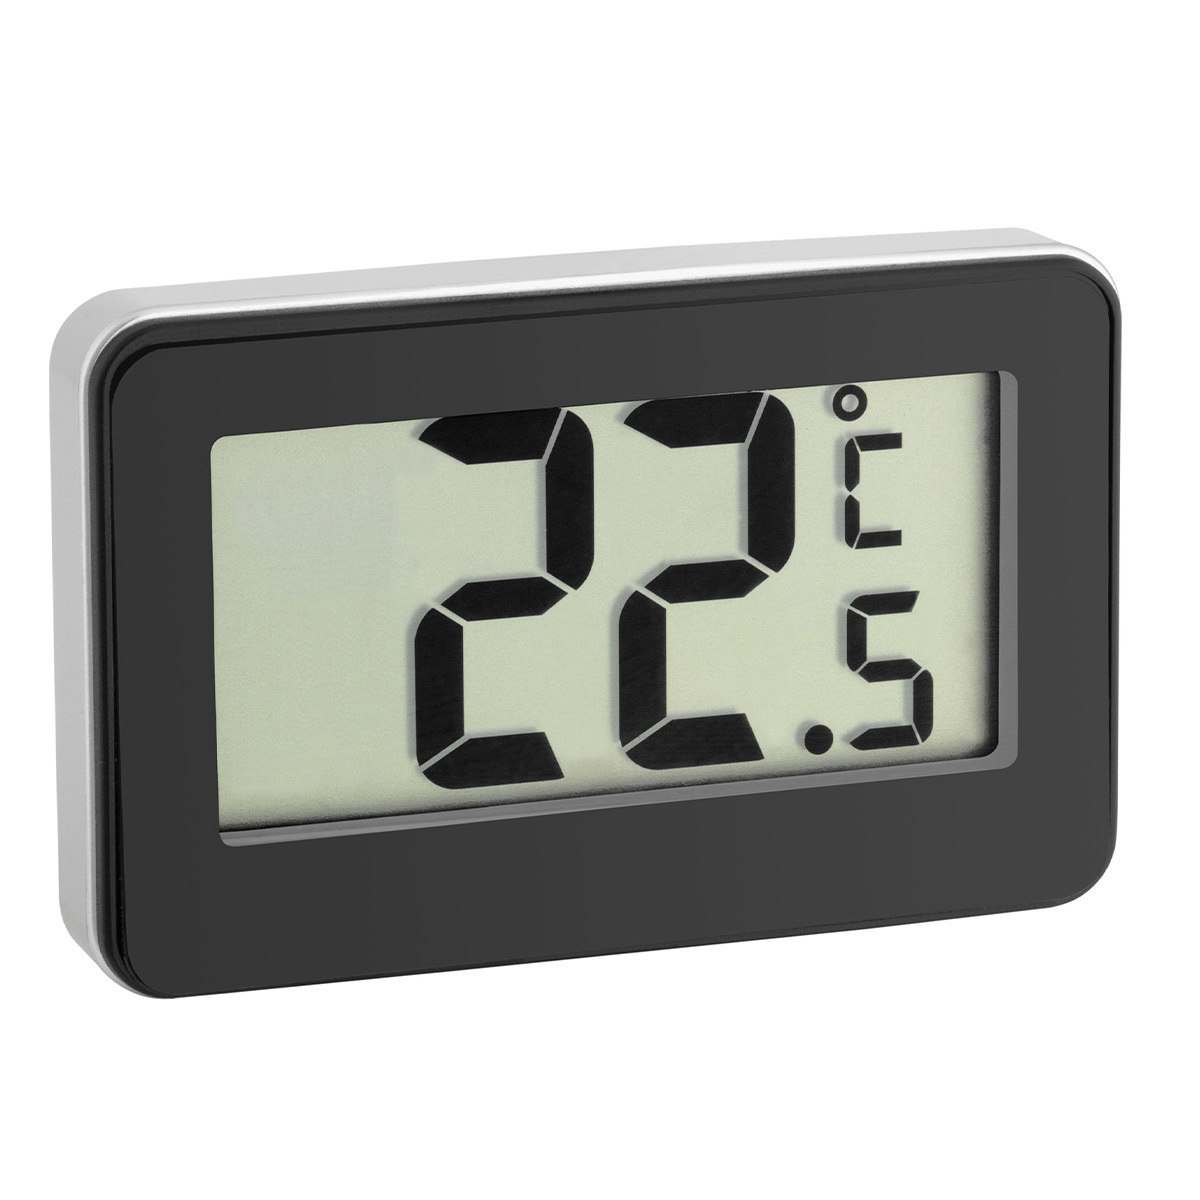 Shop Digital Fridge/ Freezer thermometer 30.2028.02 at EMI-LDA